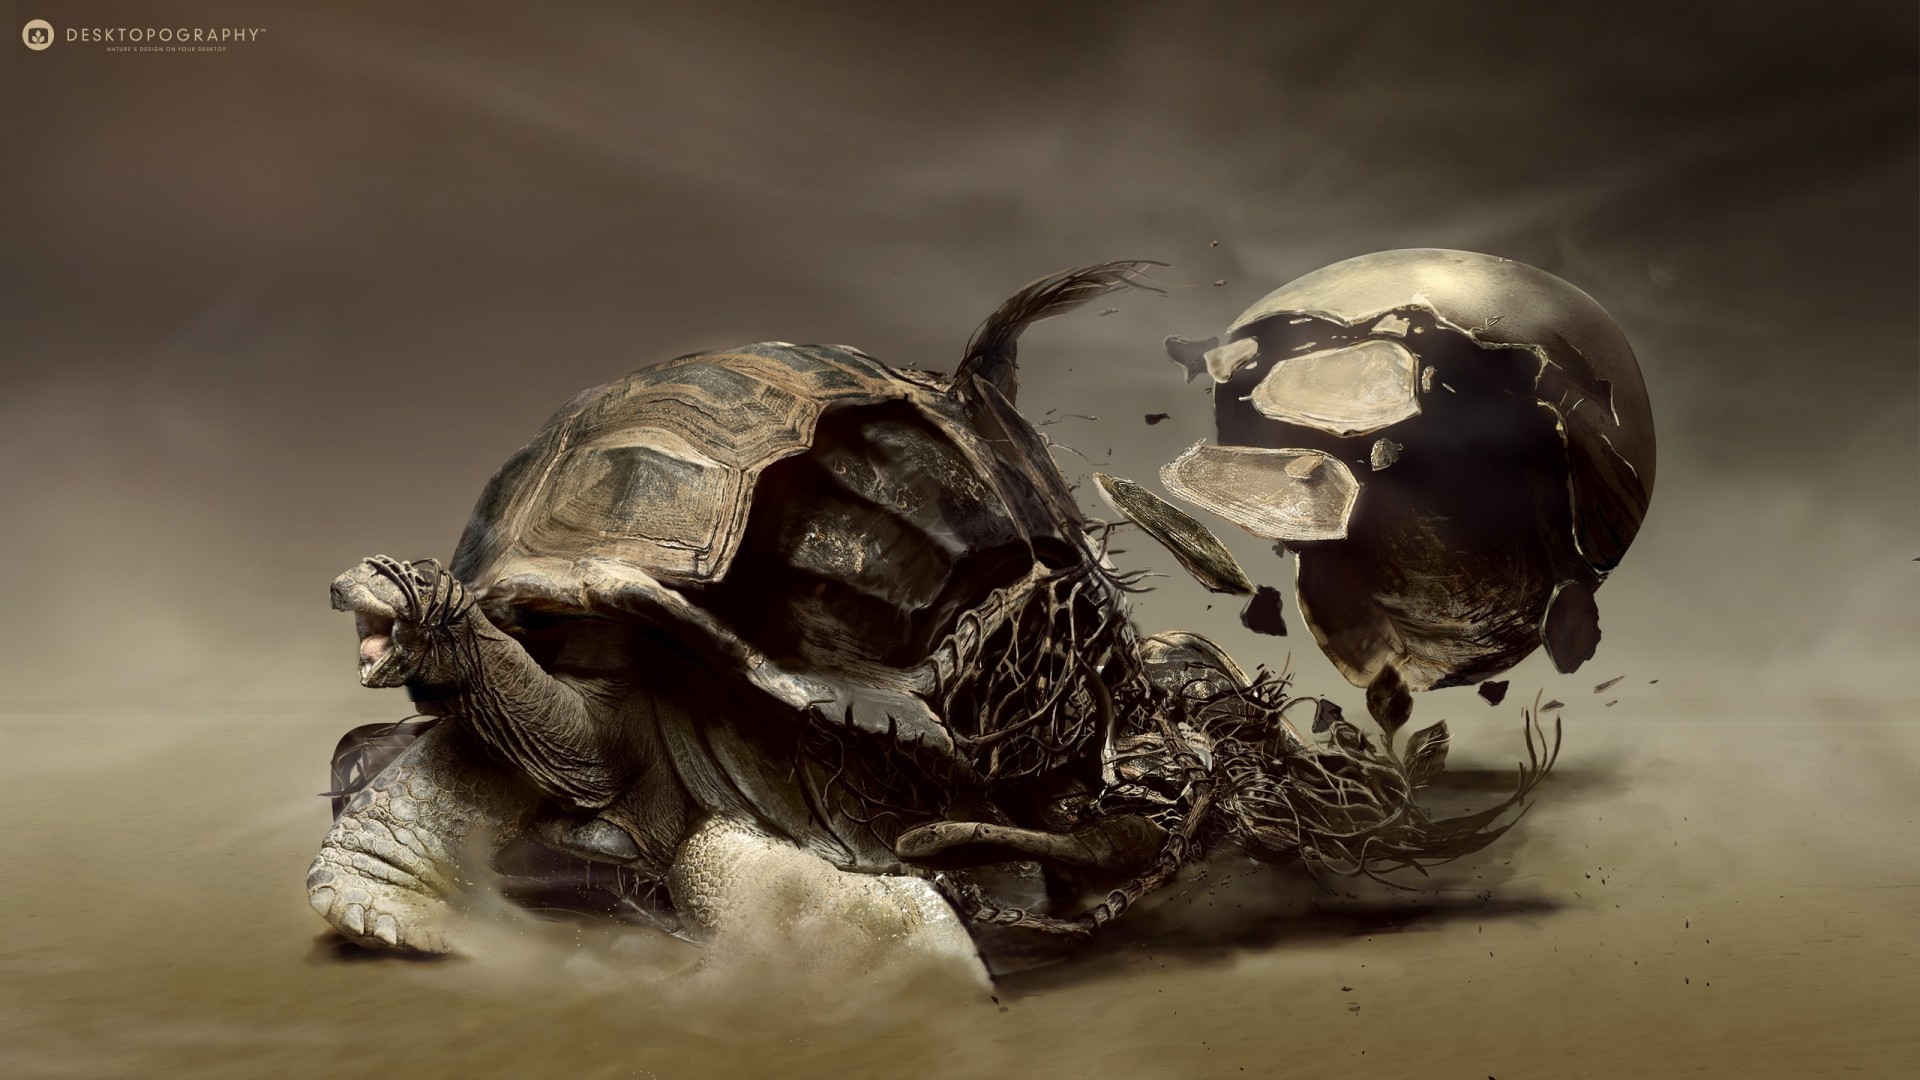 Digital Art Artwork Desktopography Animals Turtle Sand Roots 1920x1080